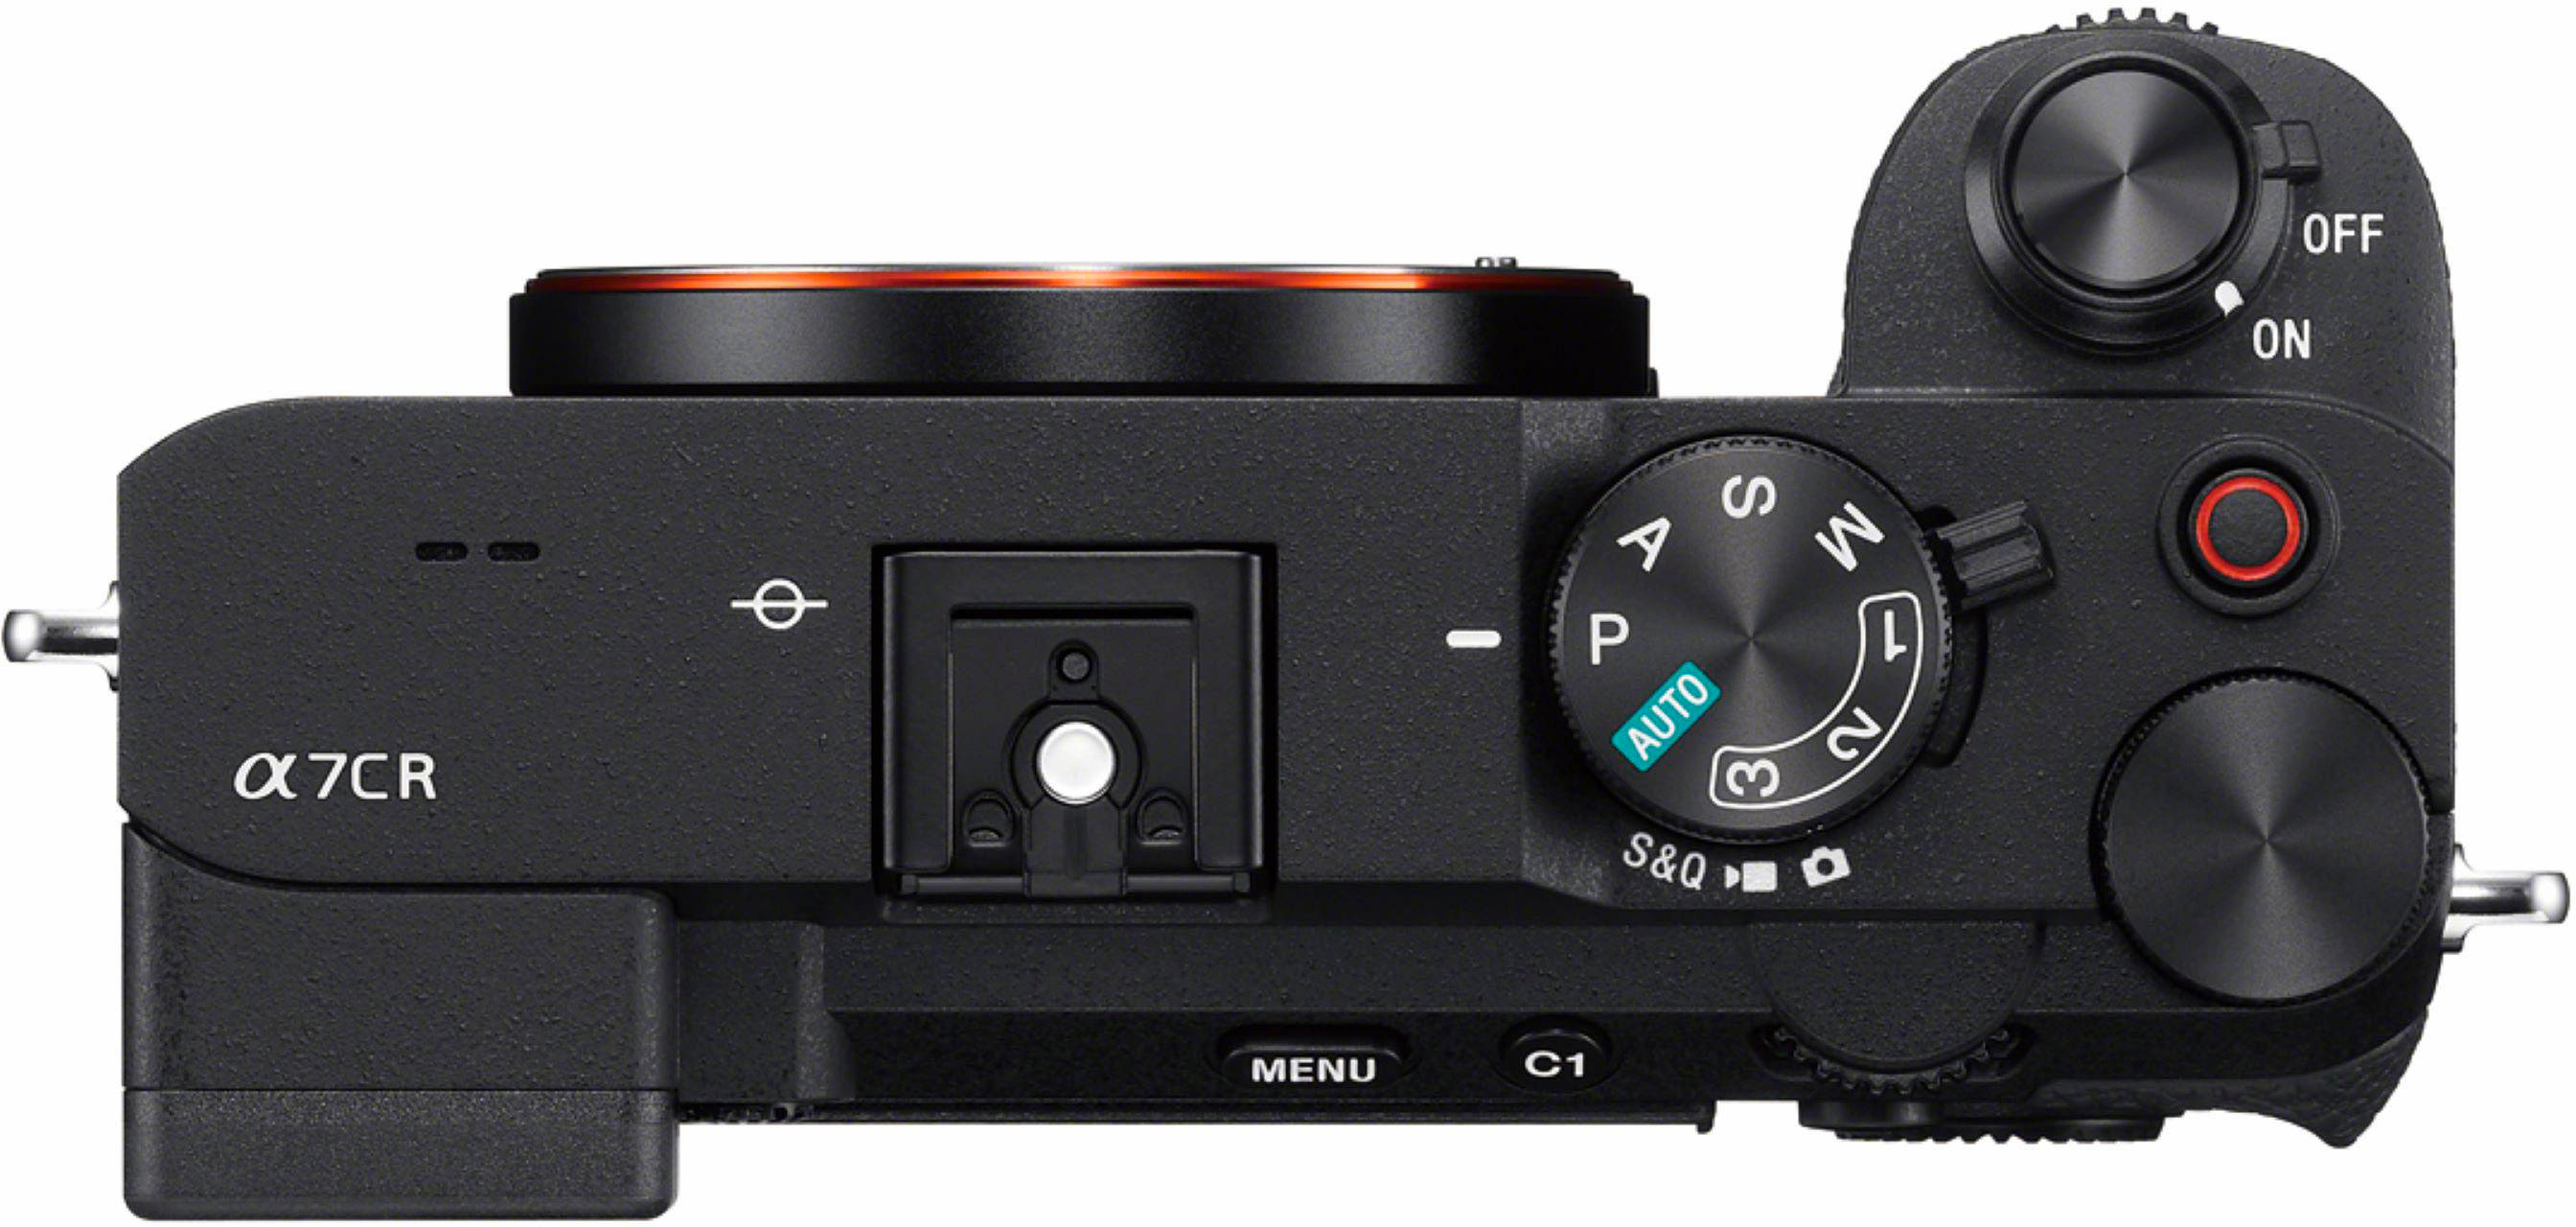 Sony Alpha 7C II and Alpha 7CR full-frame interchangeable lens